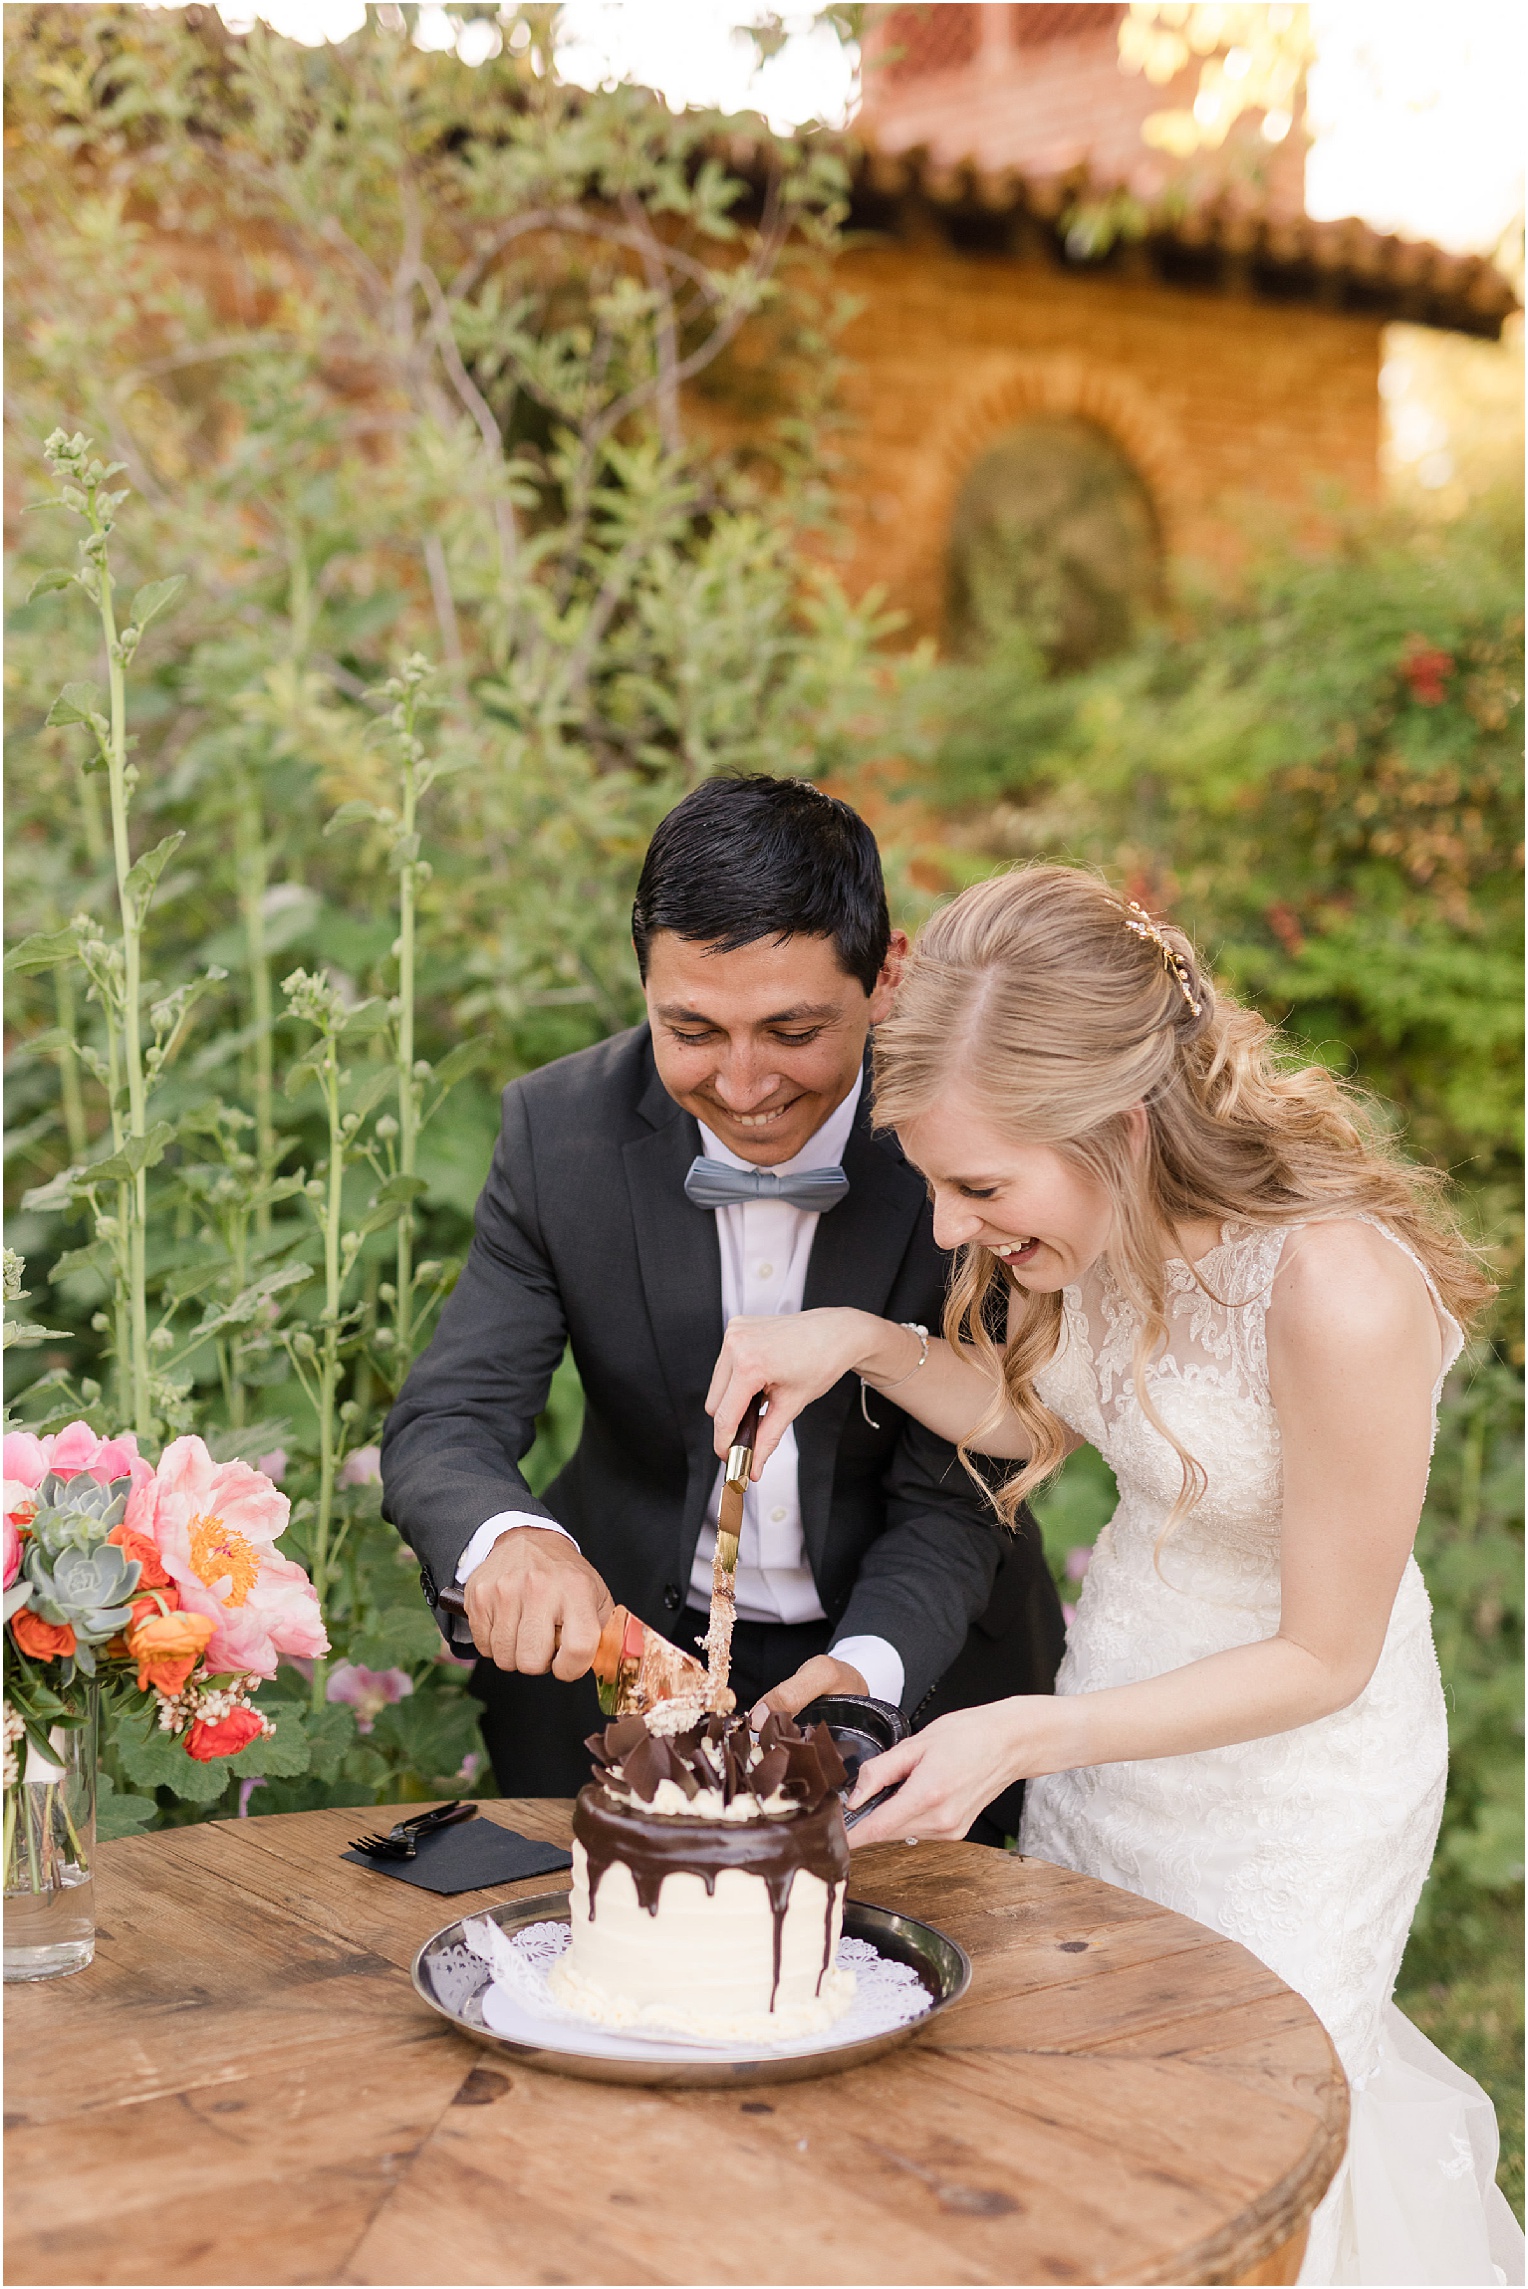 Agua Linda Farm Wedding Tucson AZ Megan & Jorge bride and groom cake